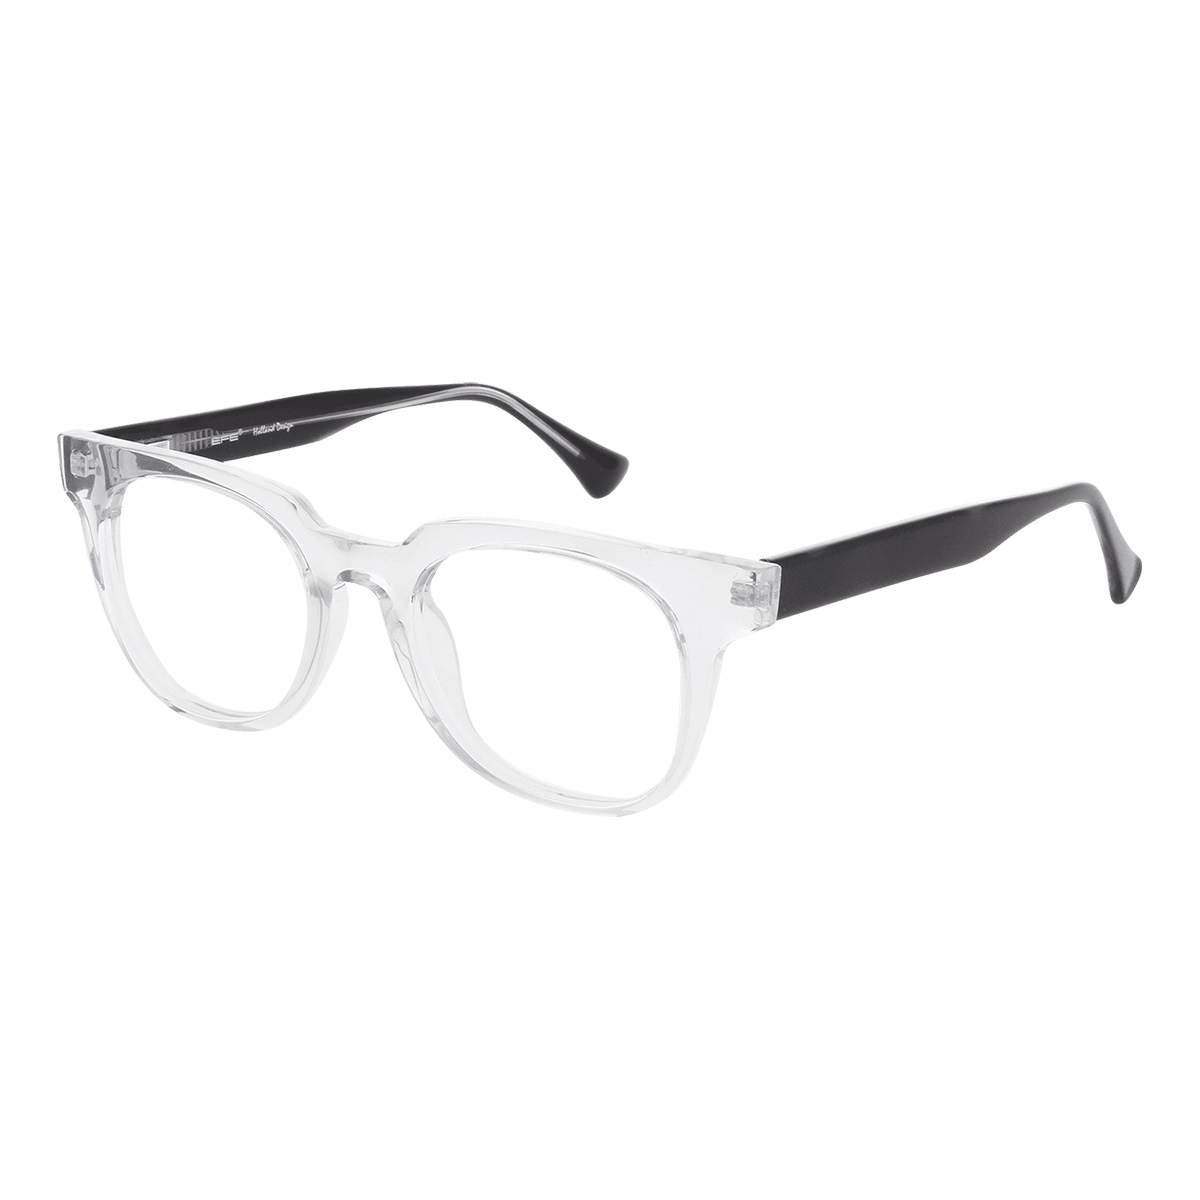 Ashwell - Square Transparent Reading Glasses for Women